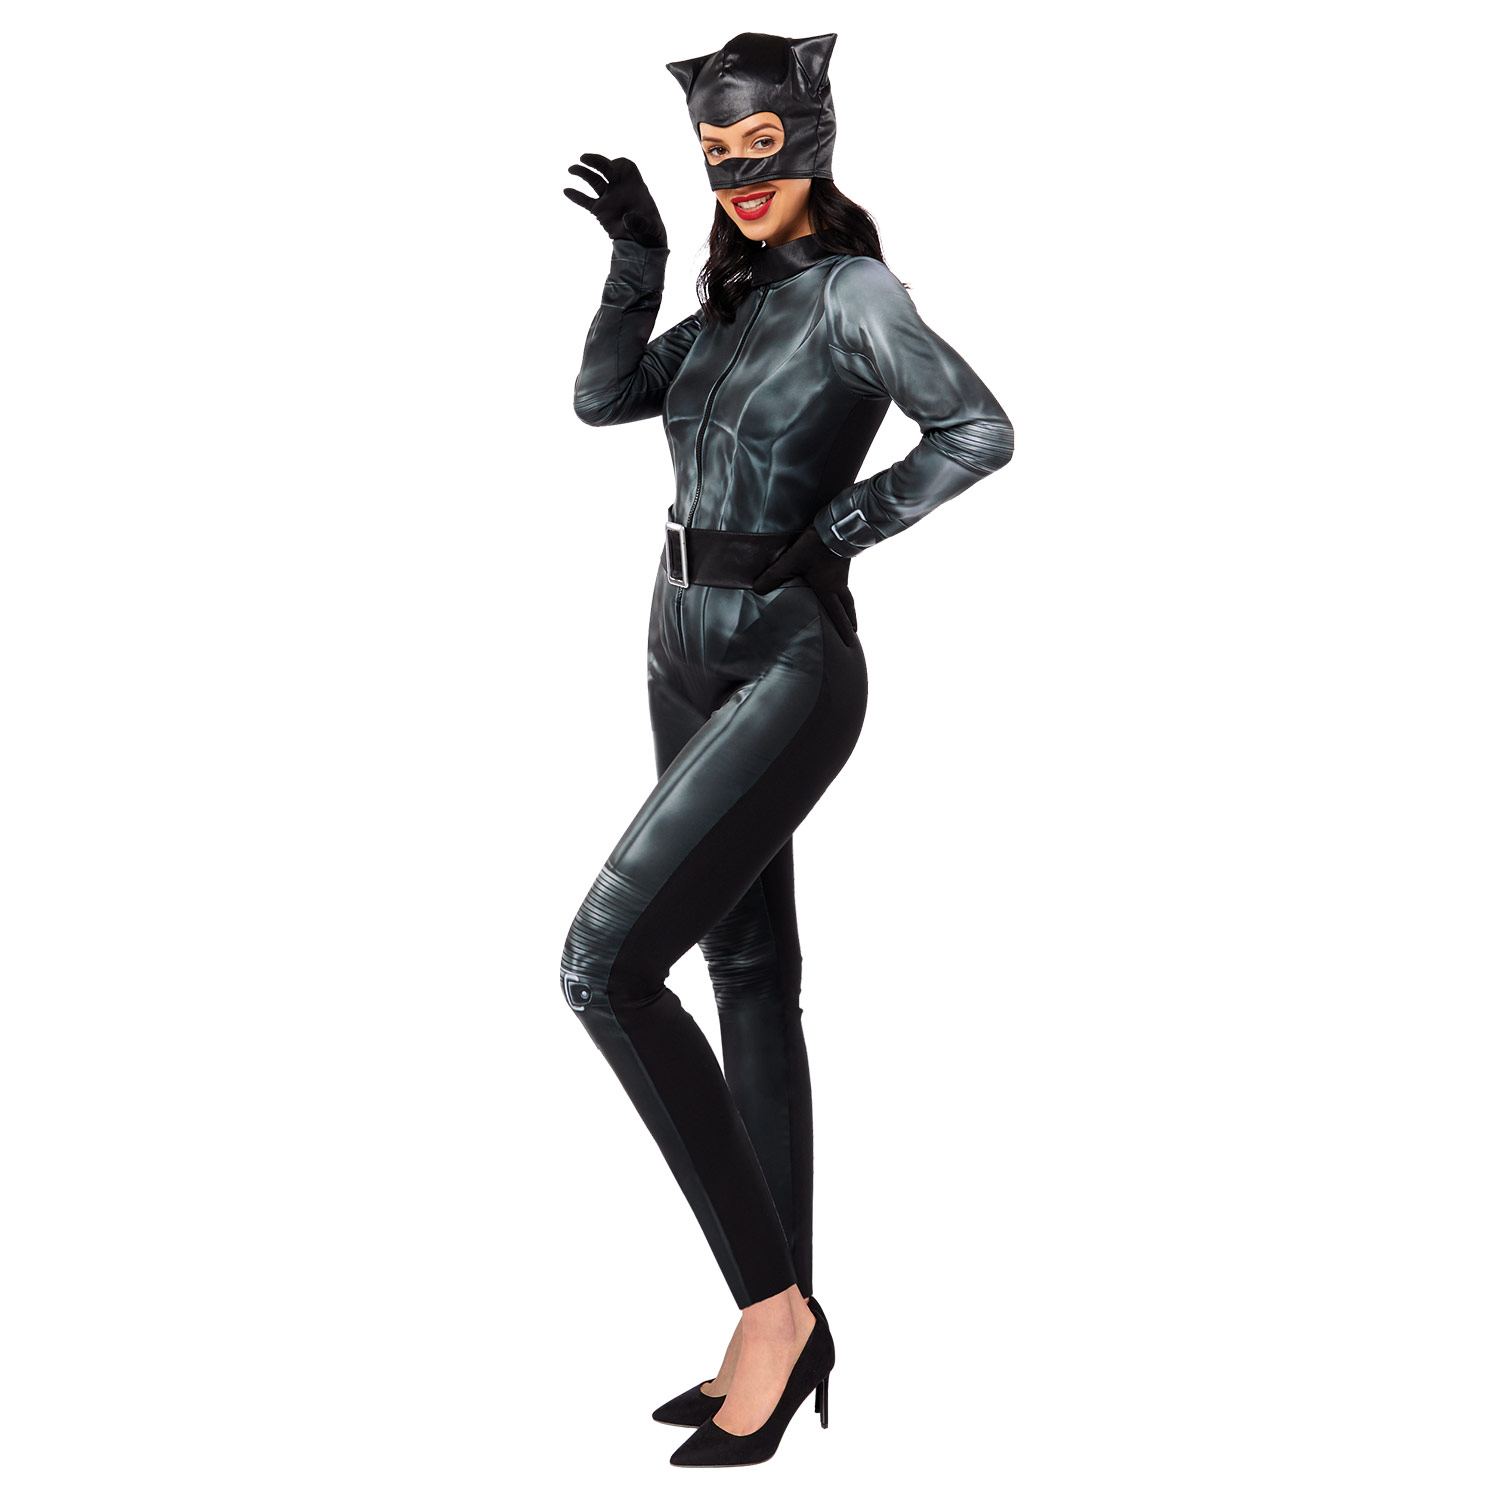 Catwoman Movie Costume - Size 10-12 - 1 PC : Amscan International